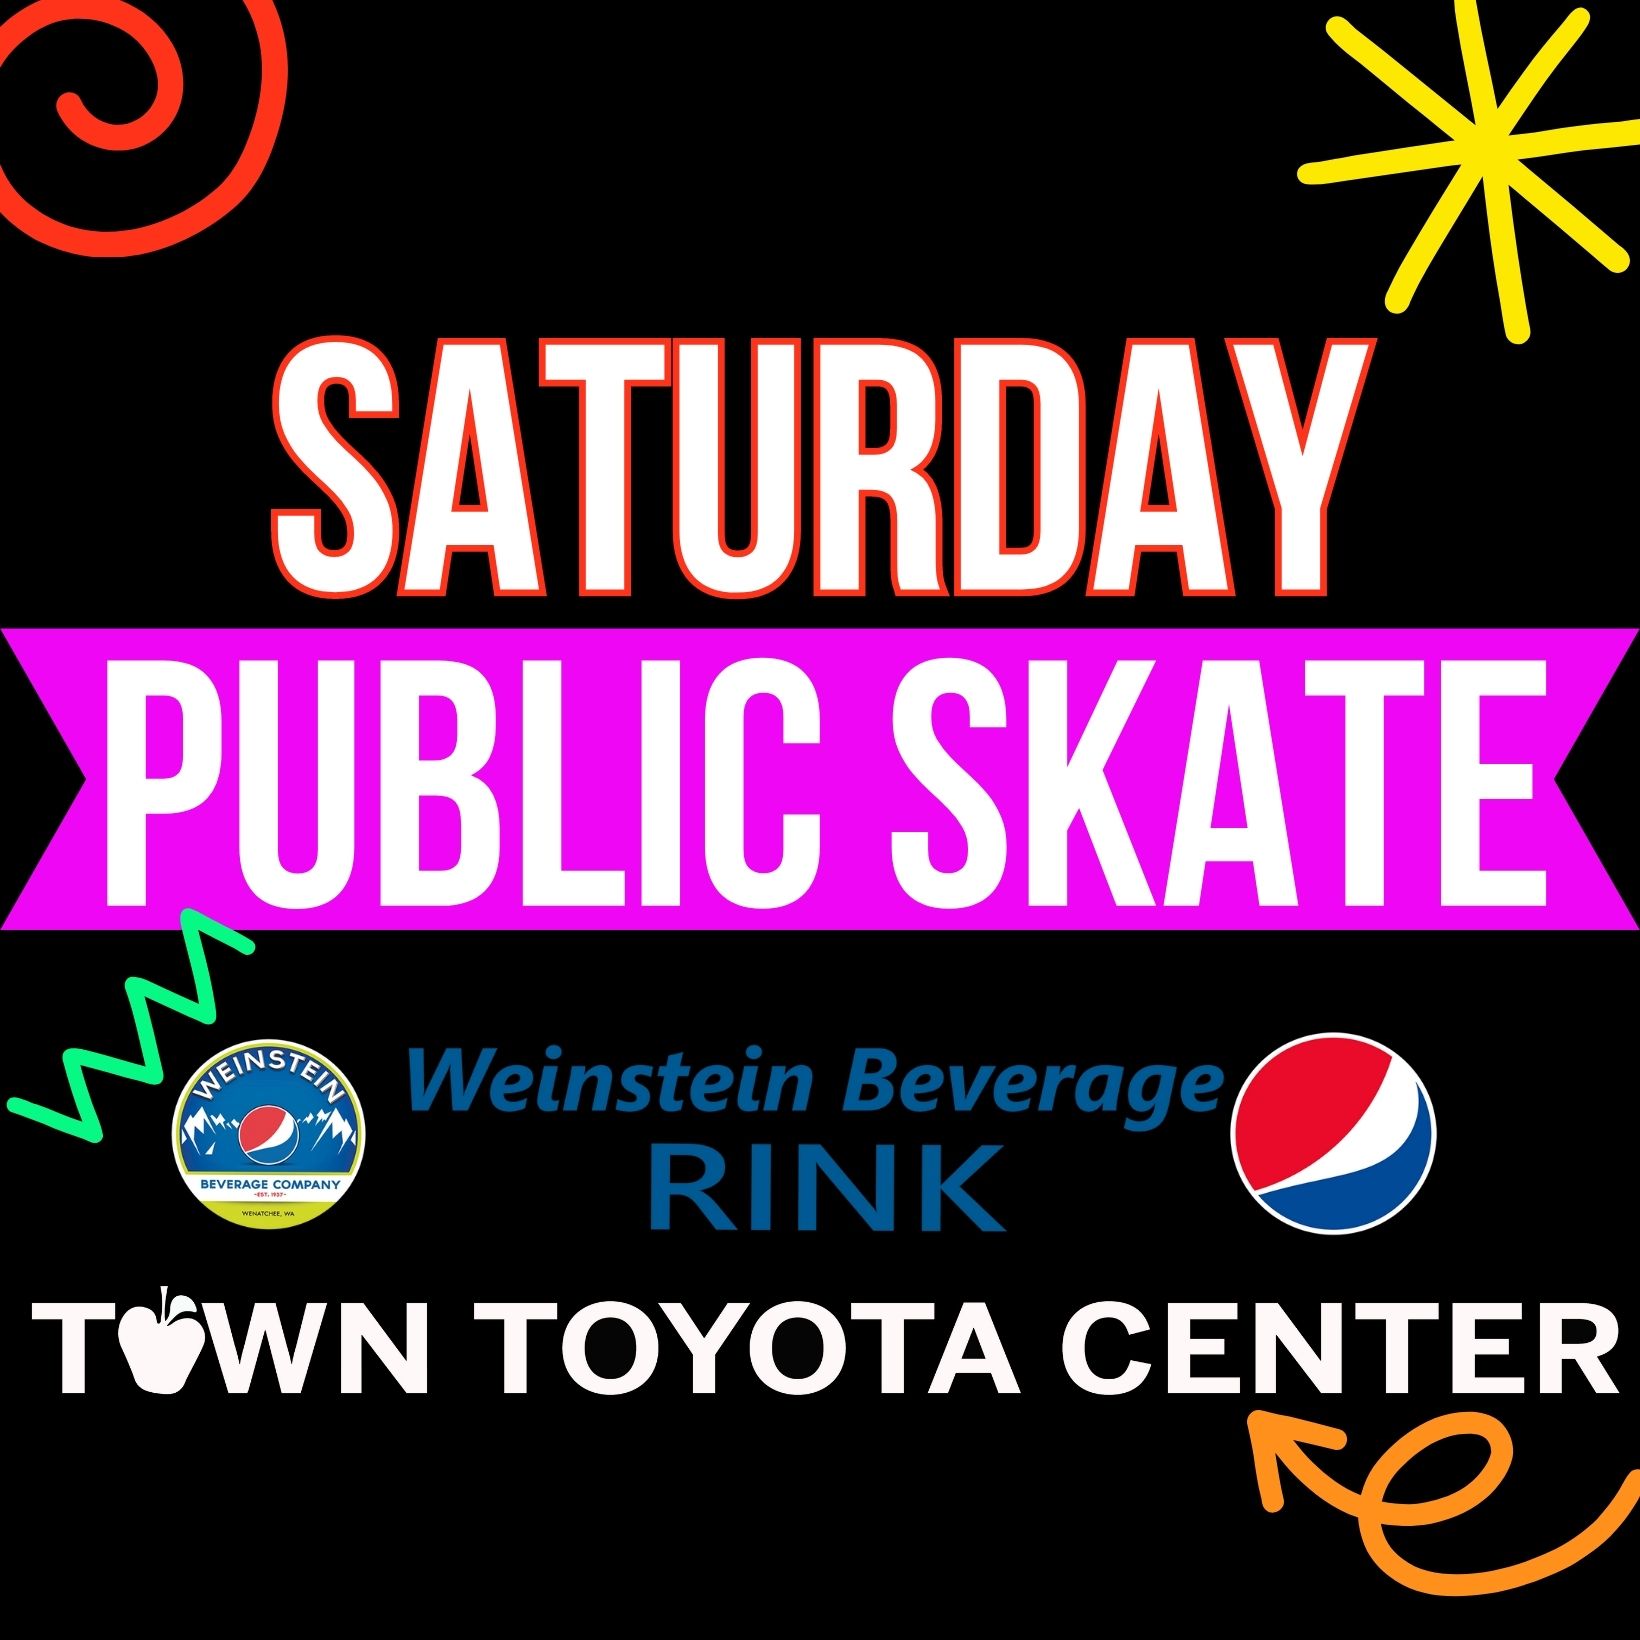 <h1 class="tribe-events-single-event-title">Saturday Public Skate</h1>